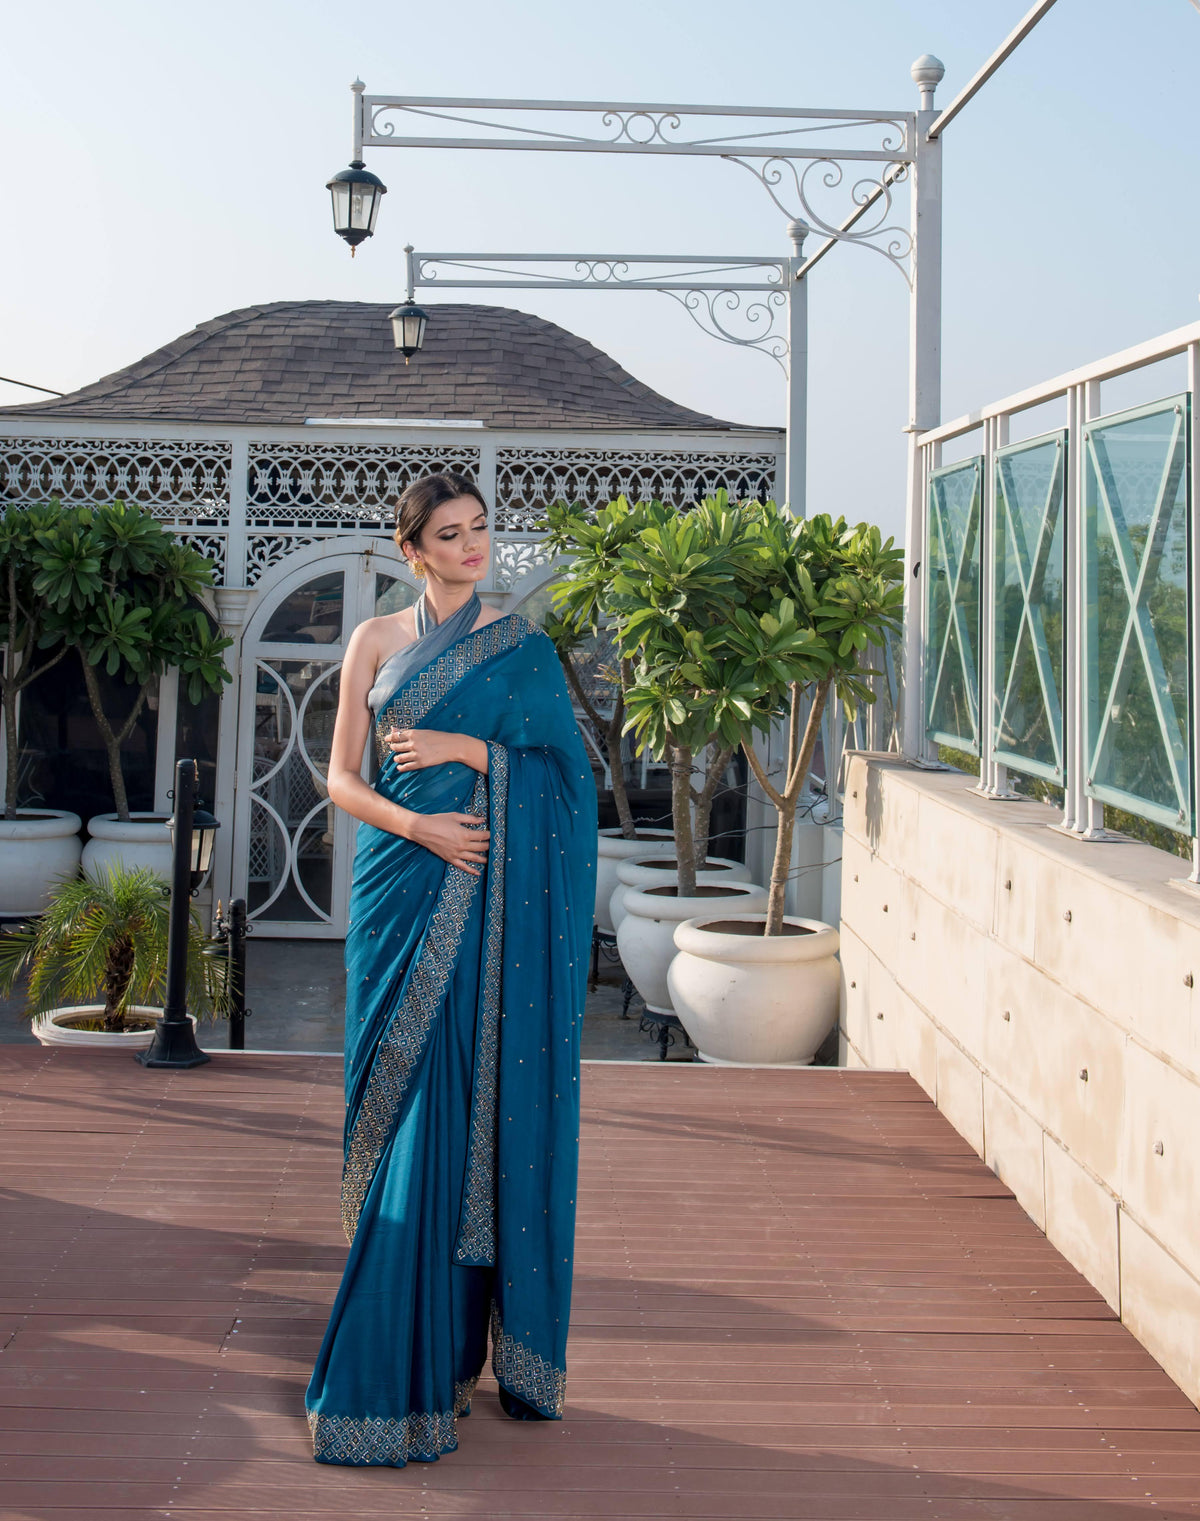 Deep blue mughal jaal embroidered saree and blouse set - Sohni